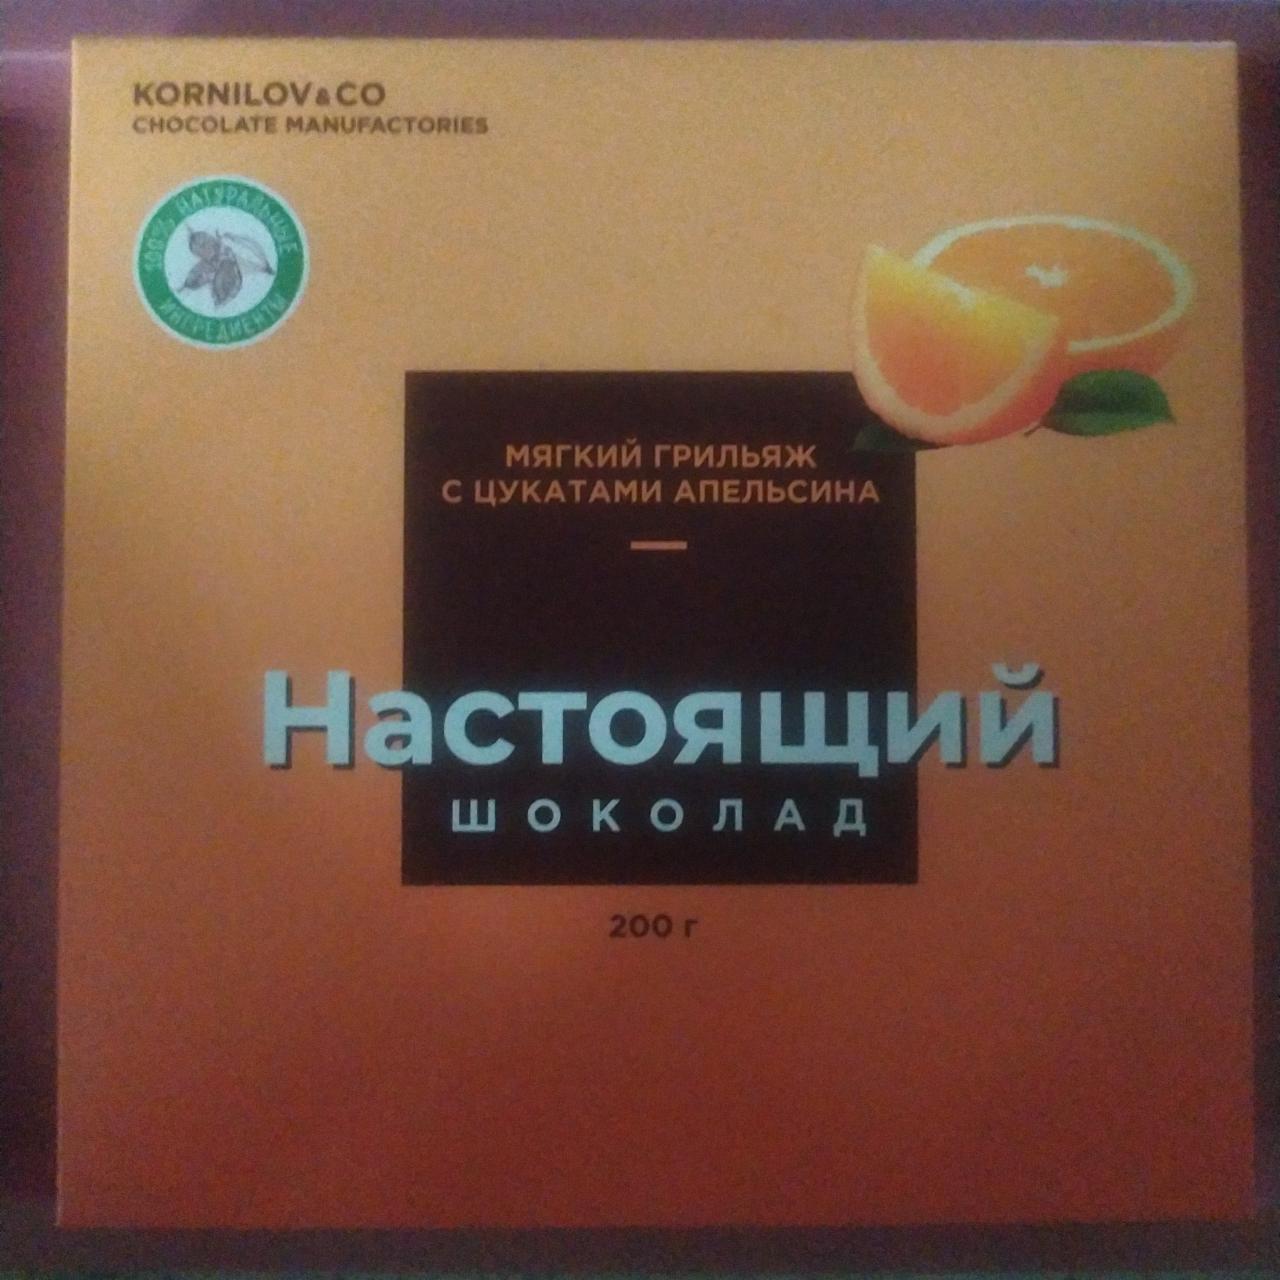 Фото - мягкий грильяж с цукатами апельсина Kornilov&Co